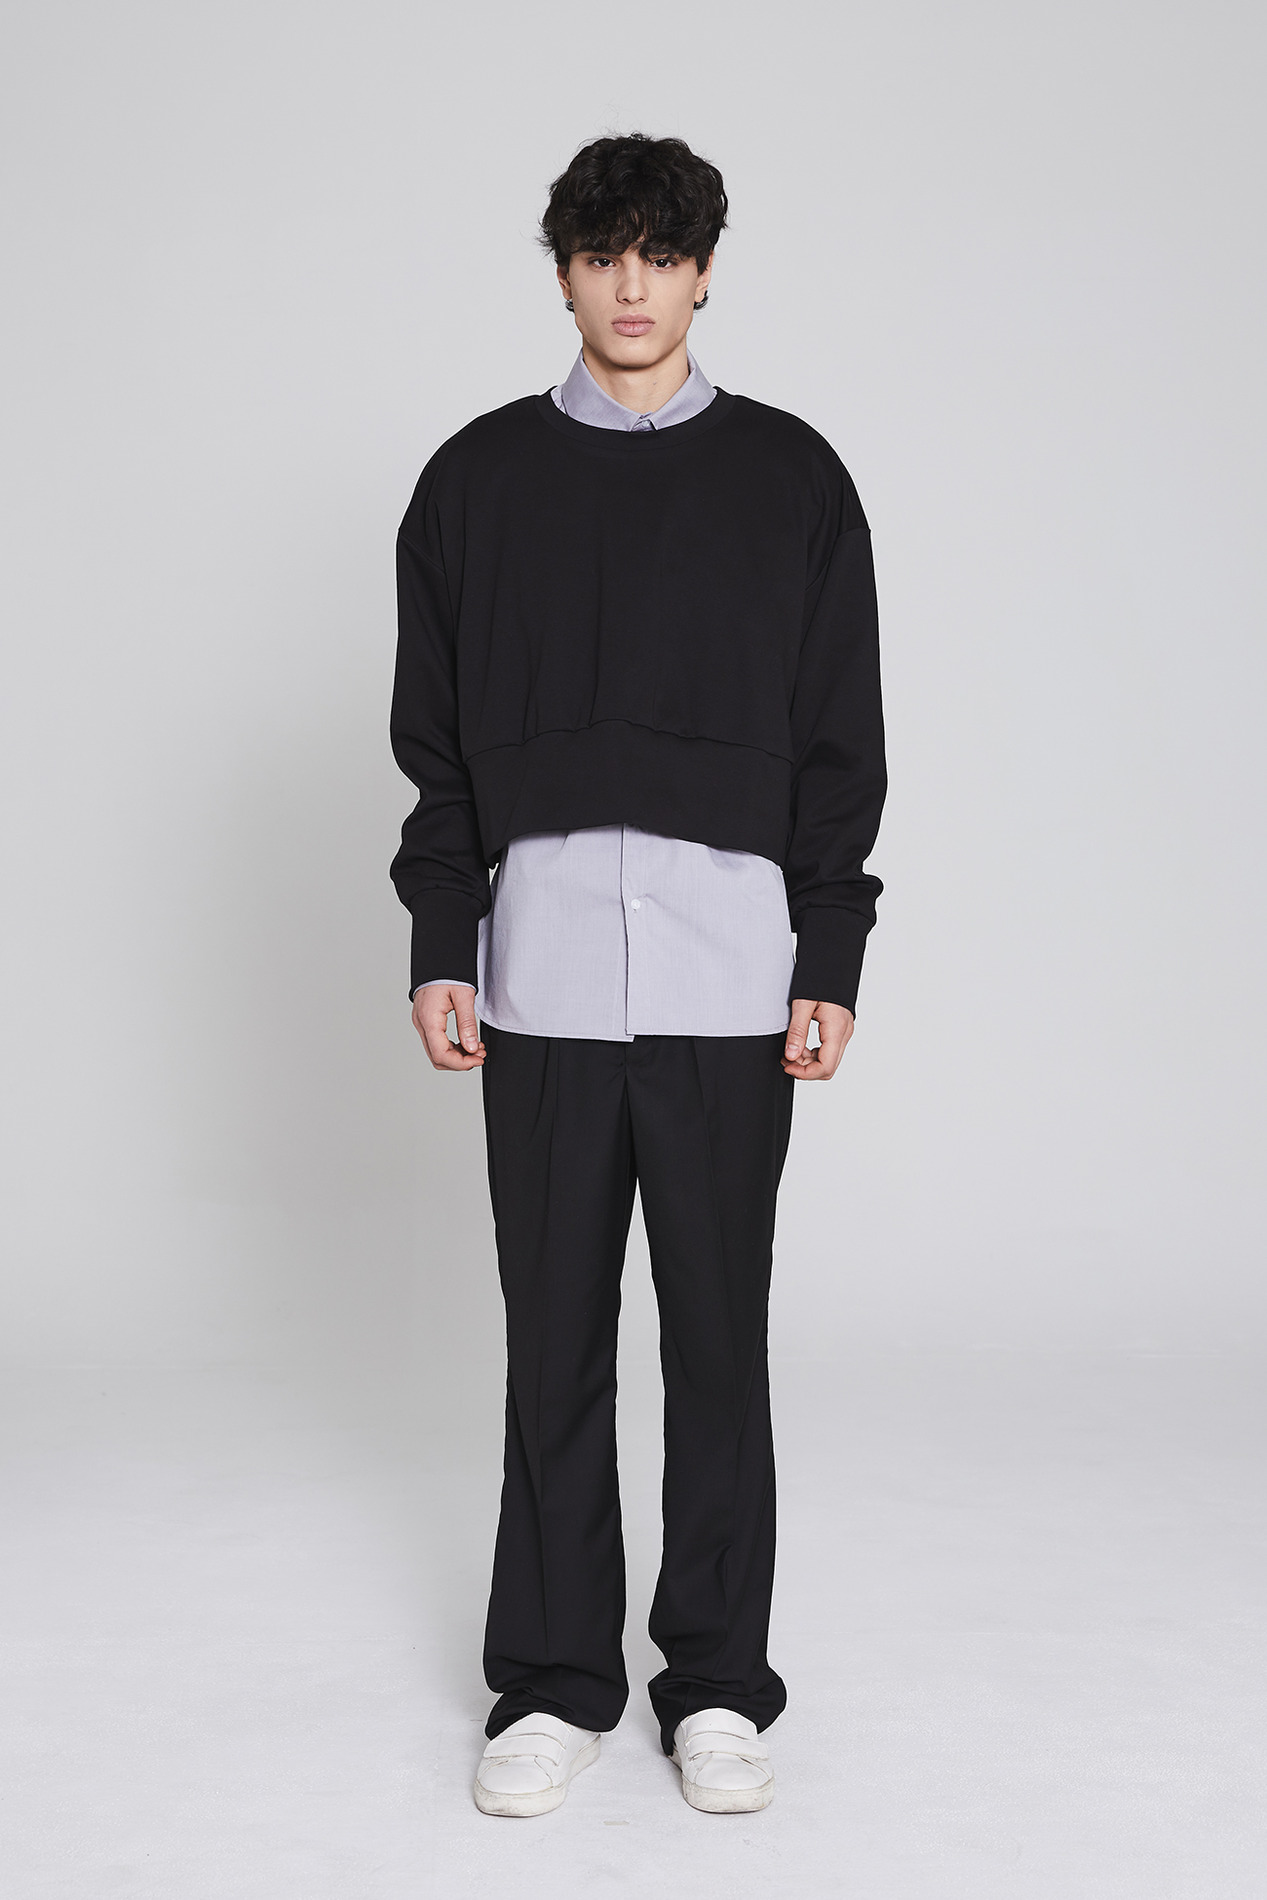 MILLIN Crop sweatshirt(black)